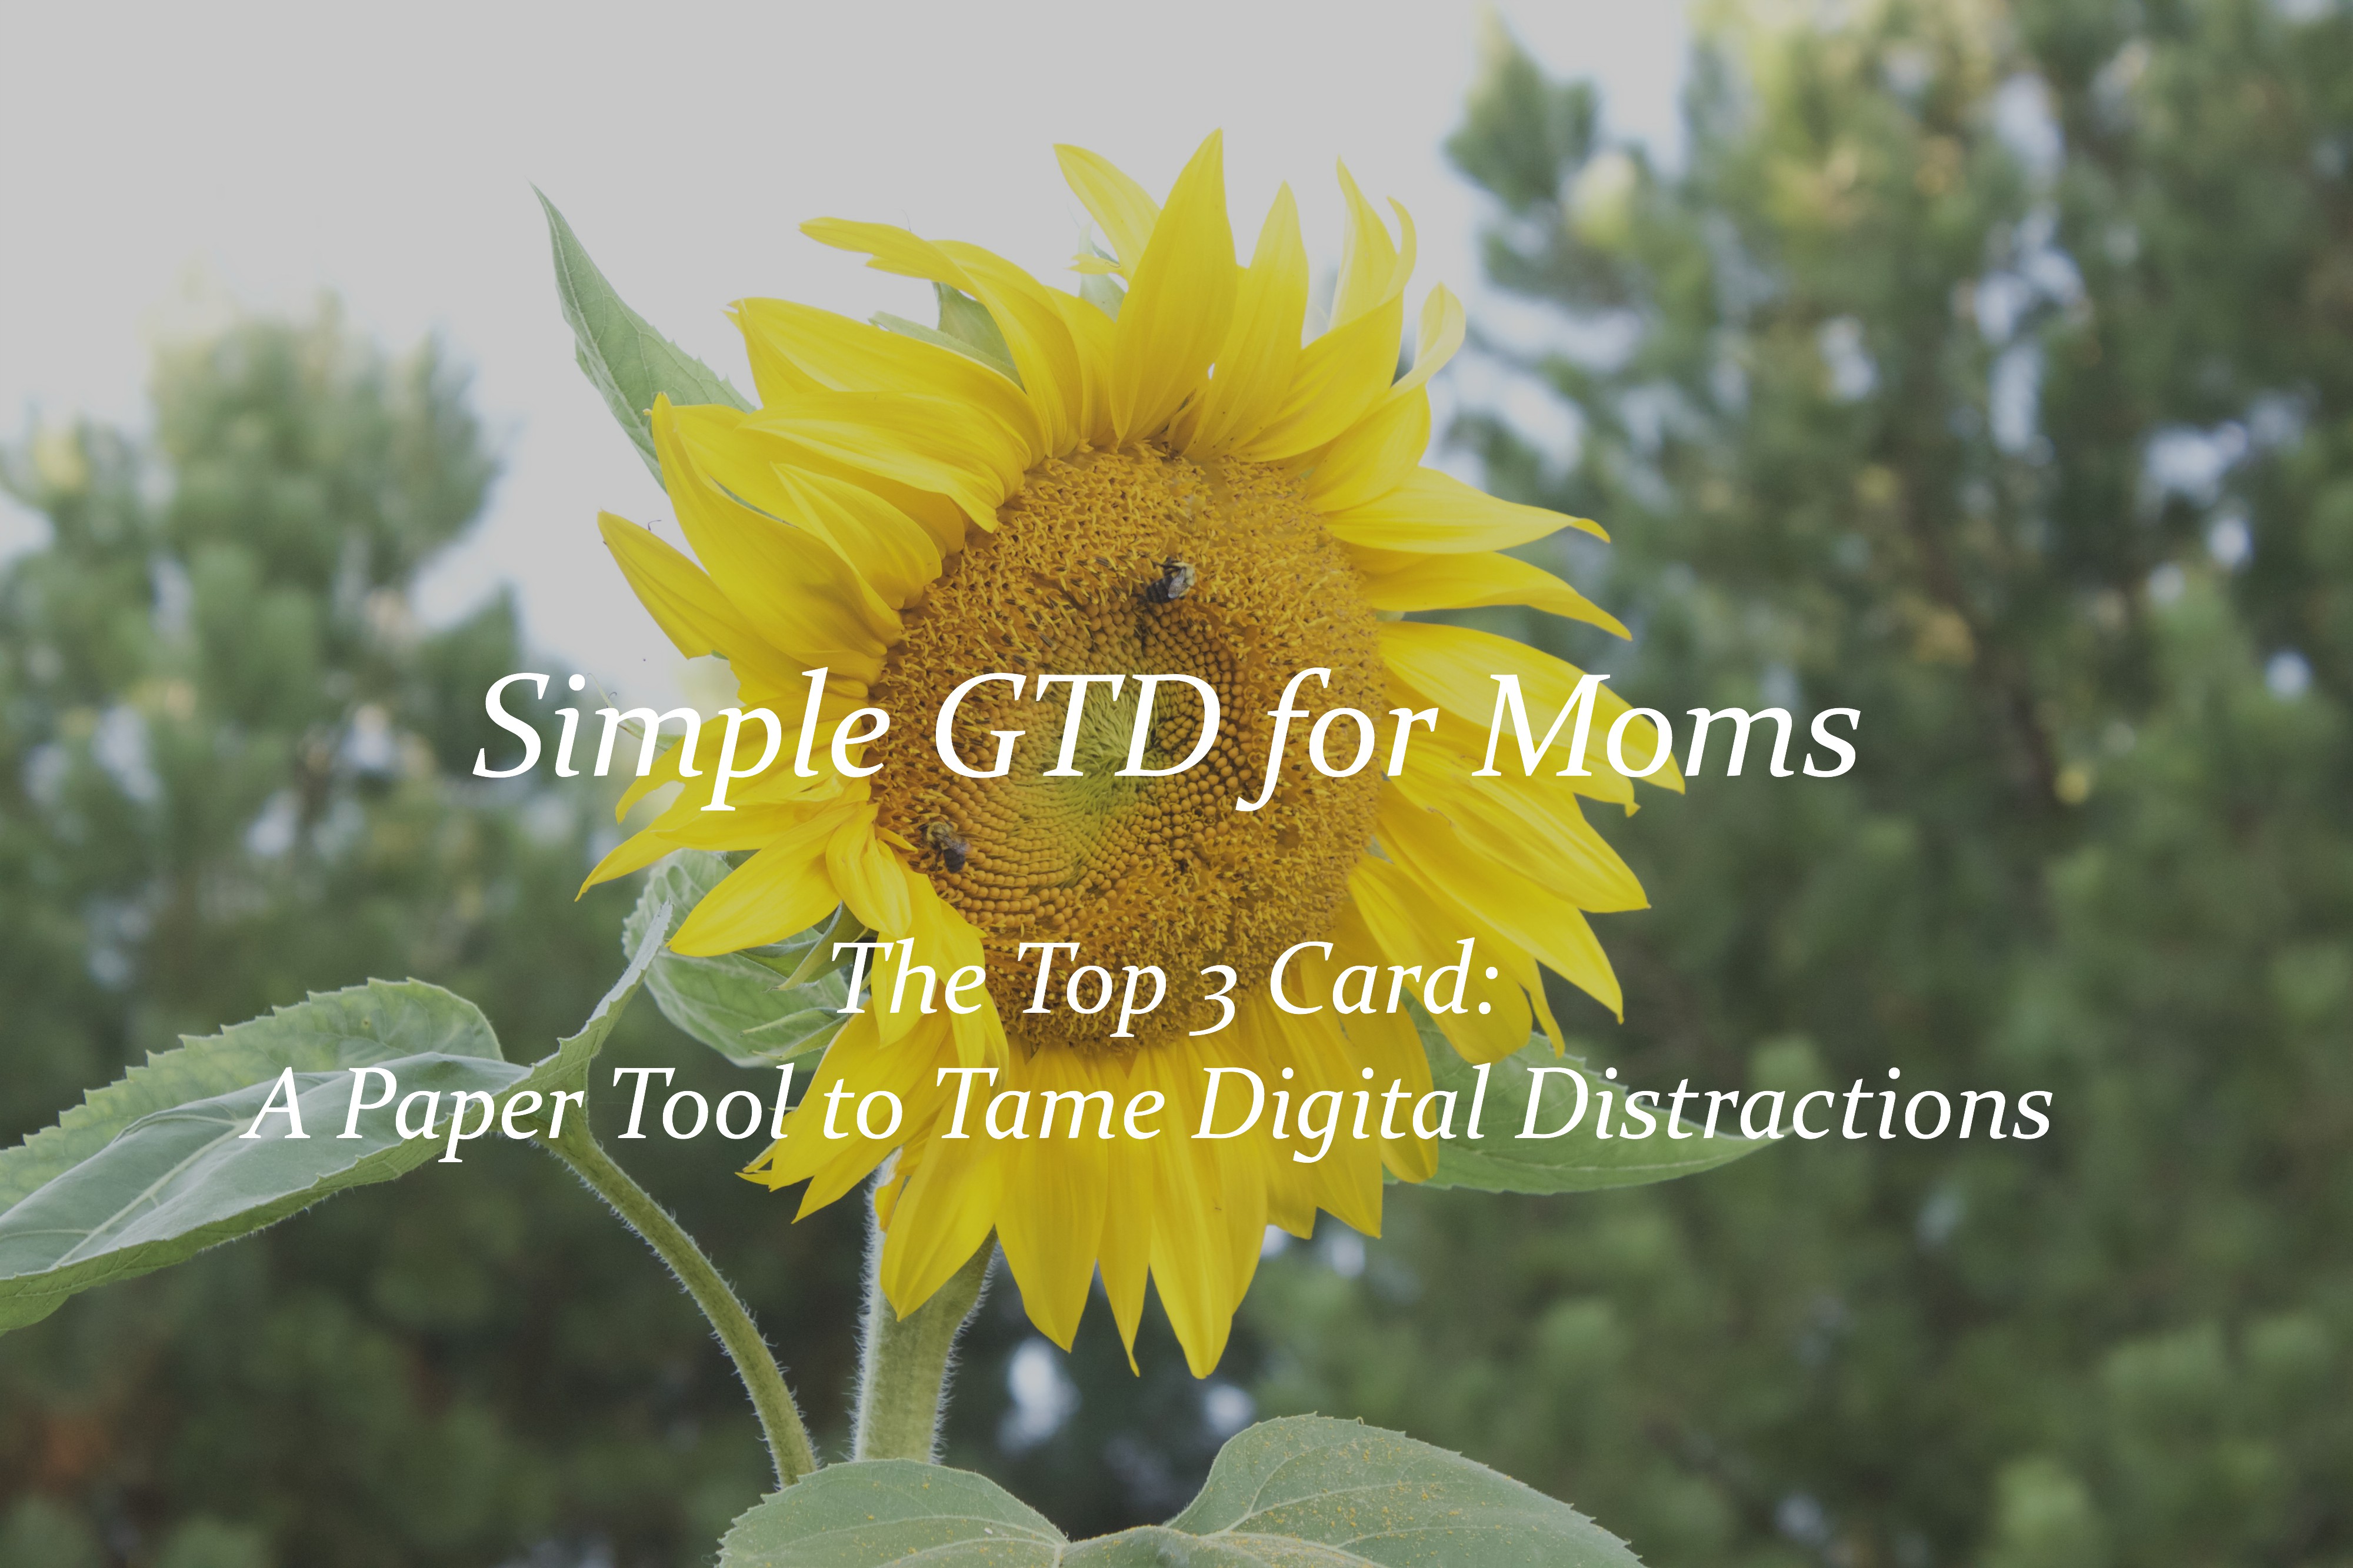 Simple GTD for Moms